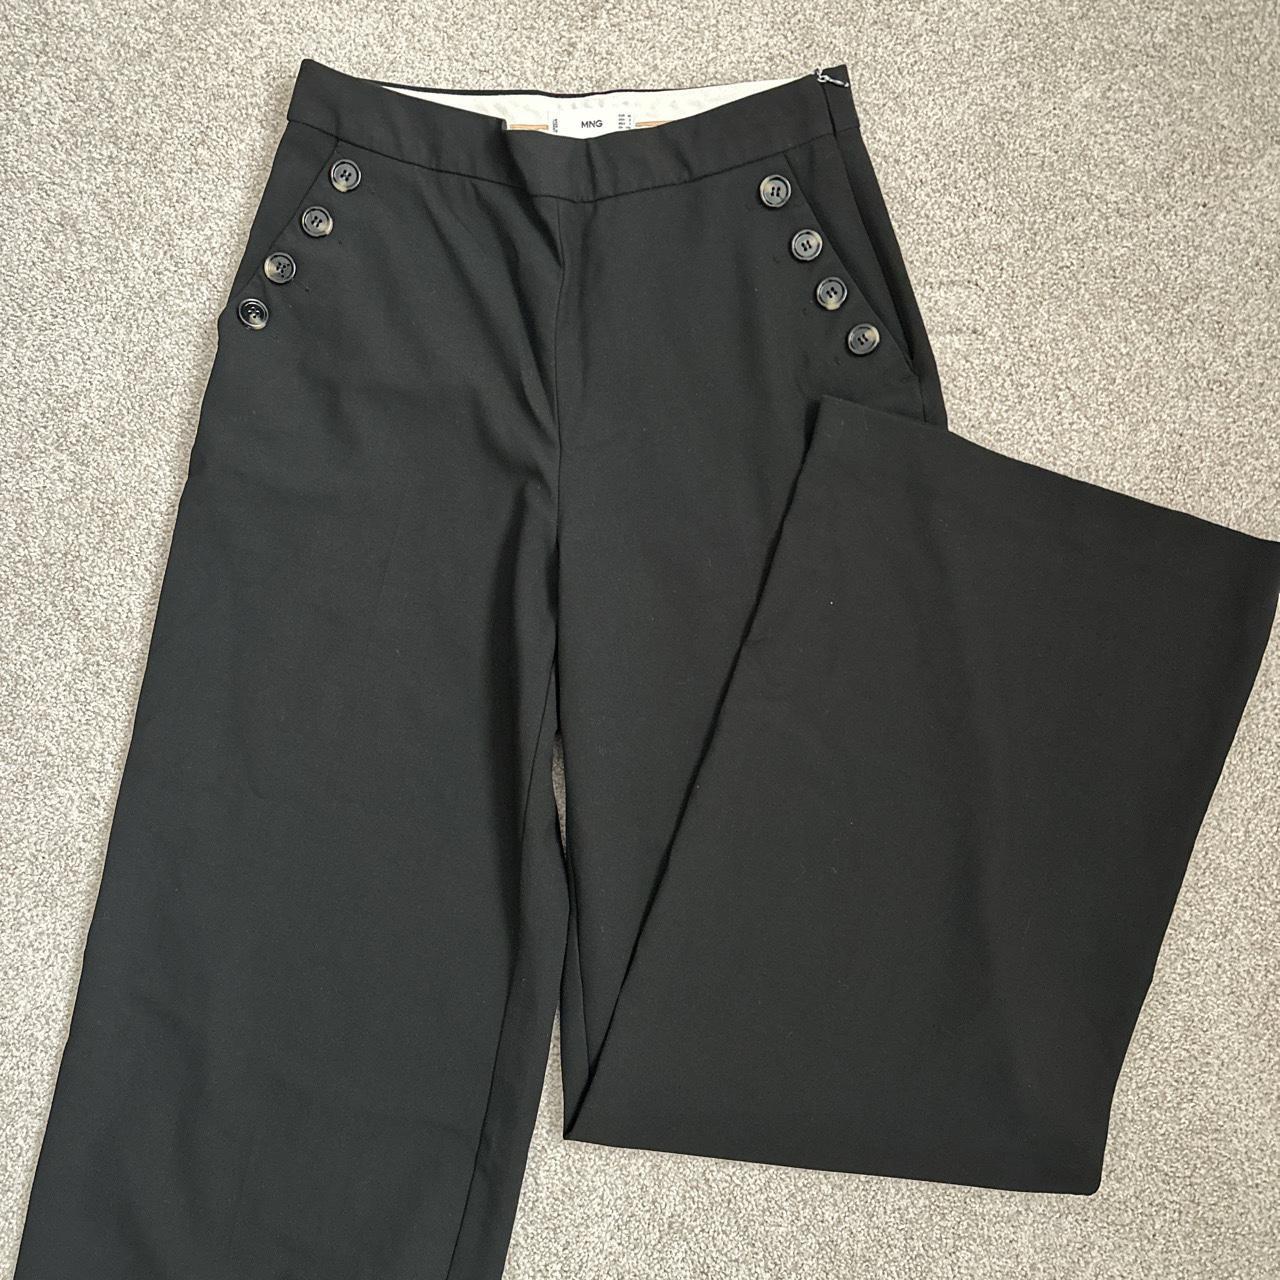 Mango MNG Suit Women's Black Trousers Size 6 Pleated Dress Pants | eBay